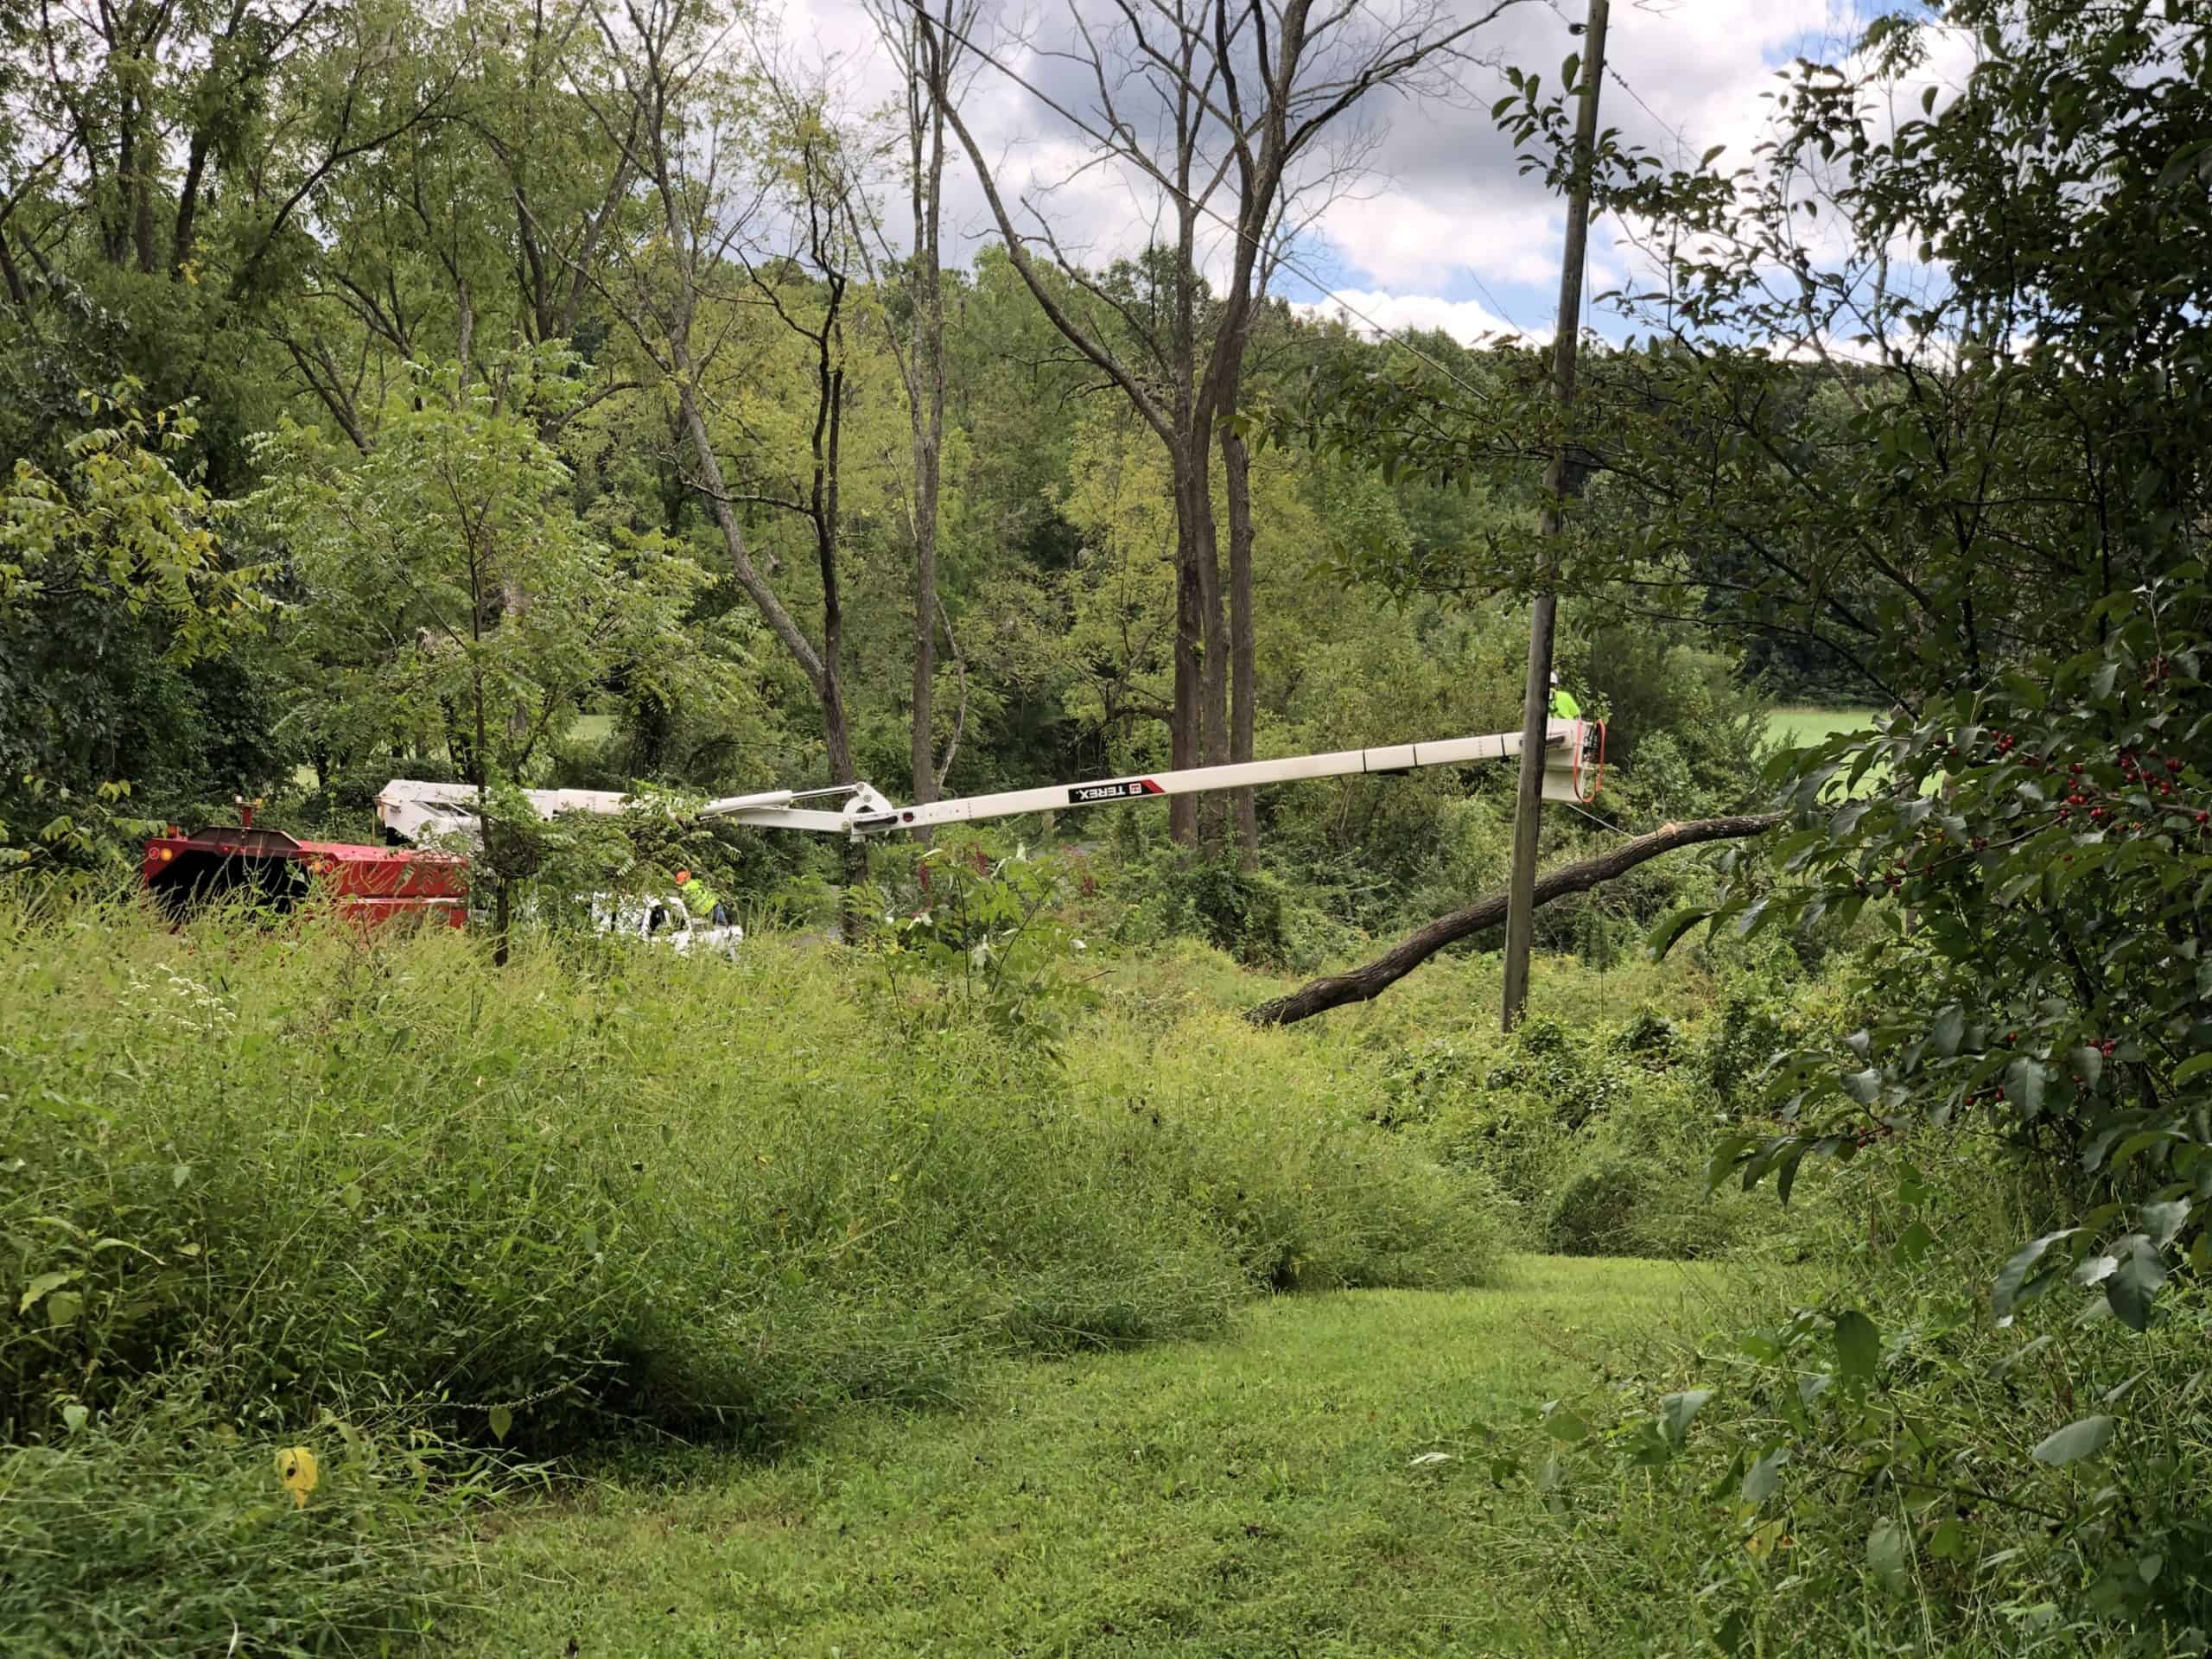 Tree company bucket truck cutting fallen tree off of utility lines